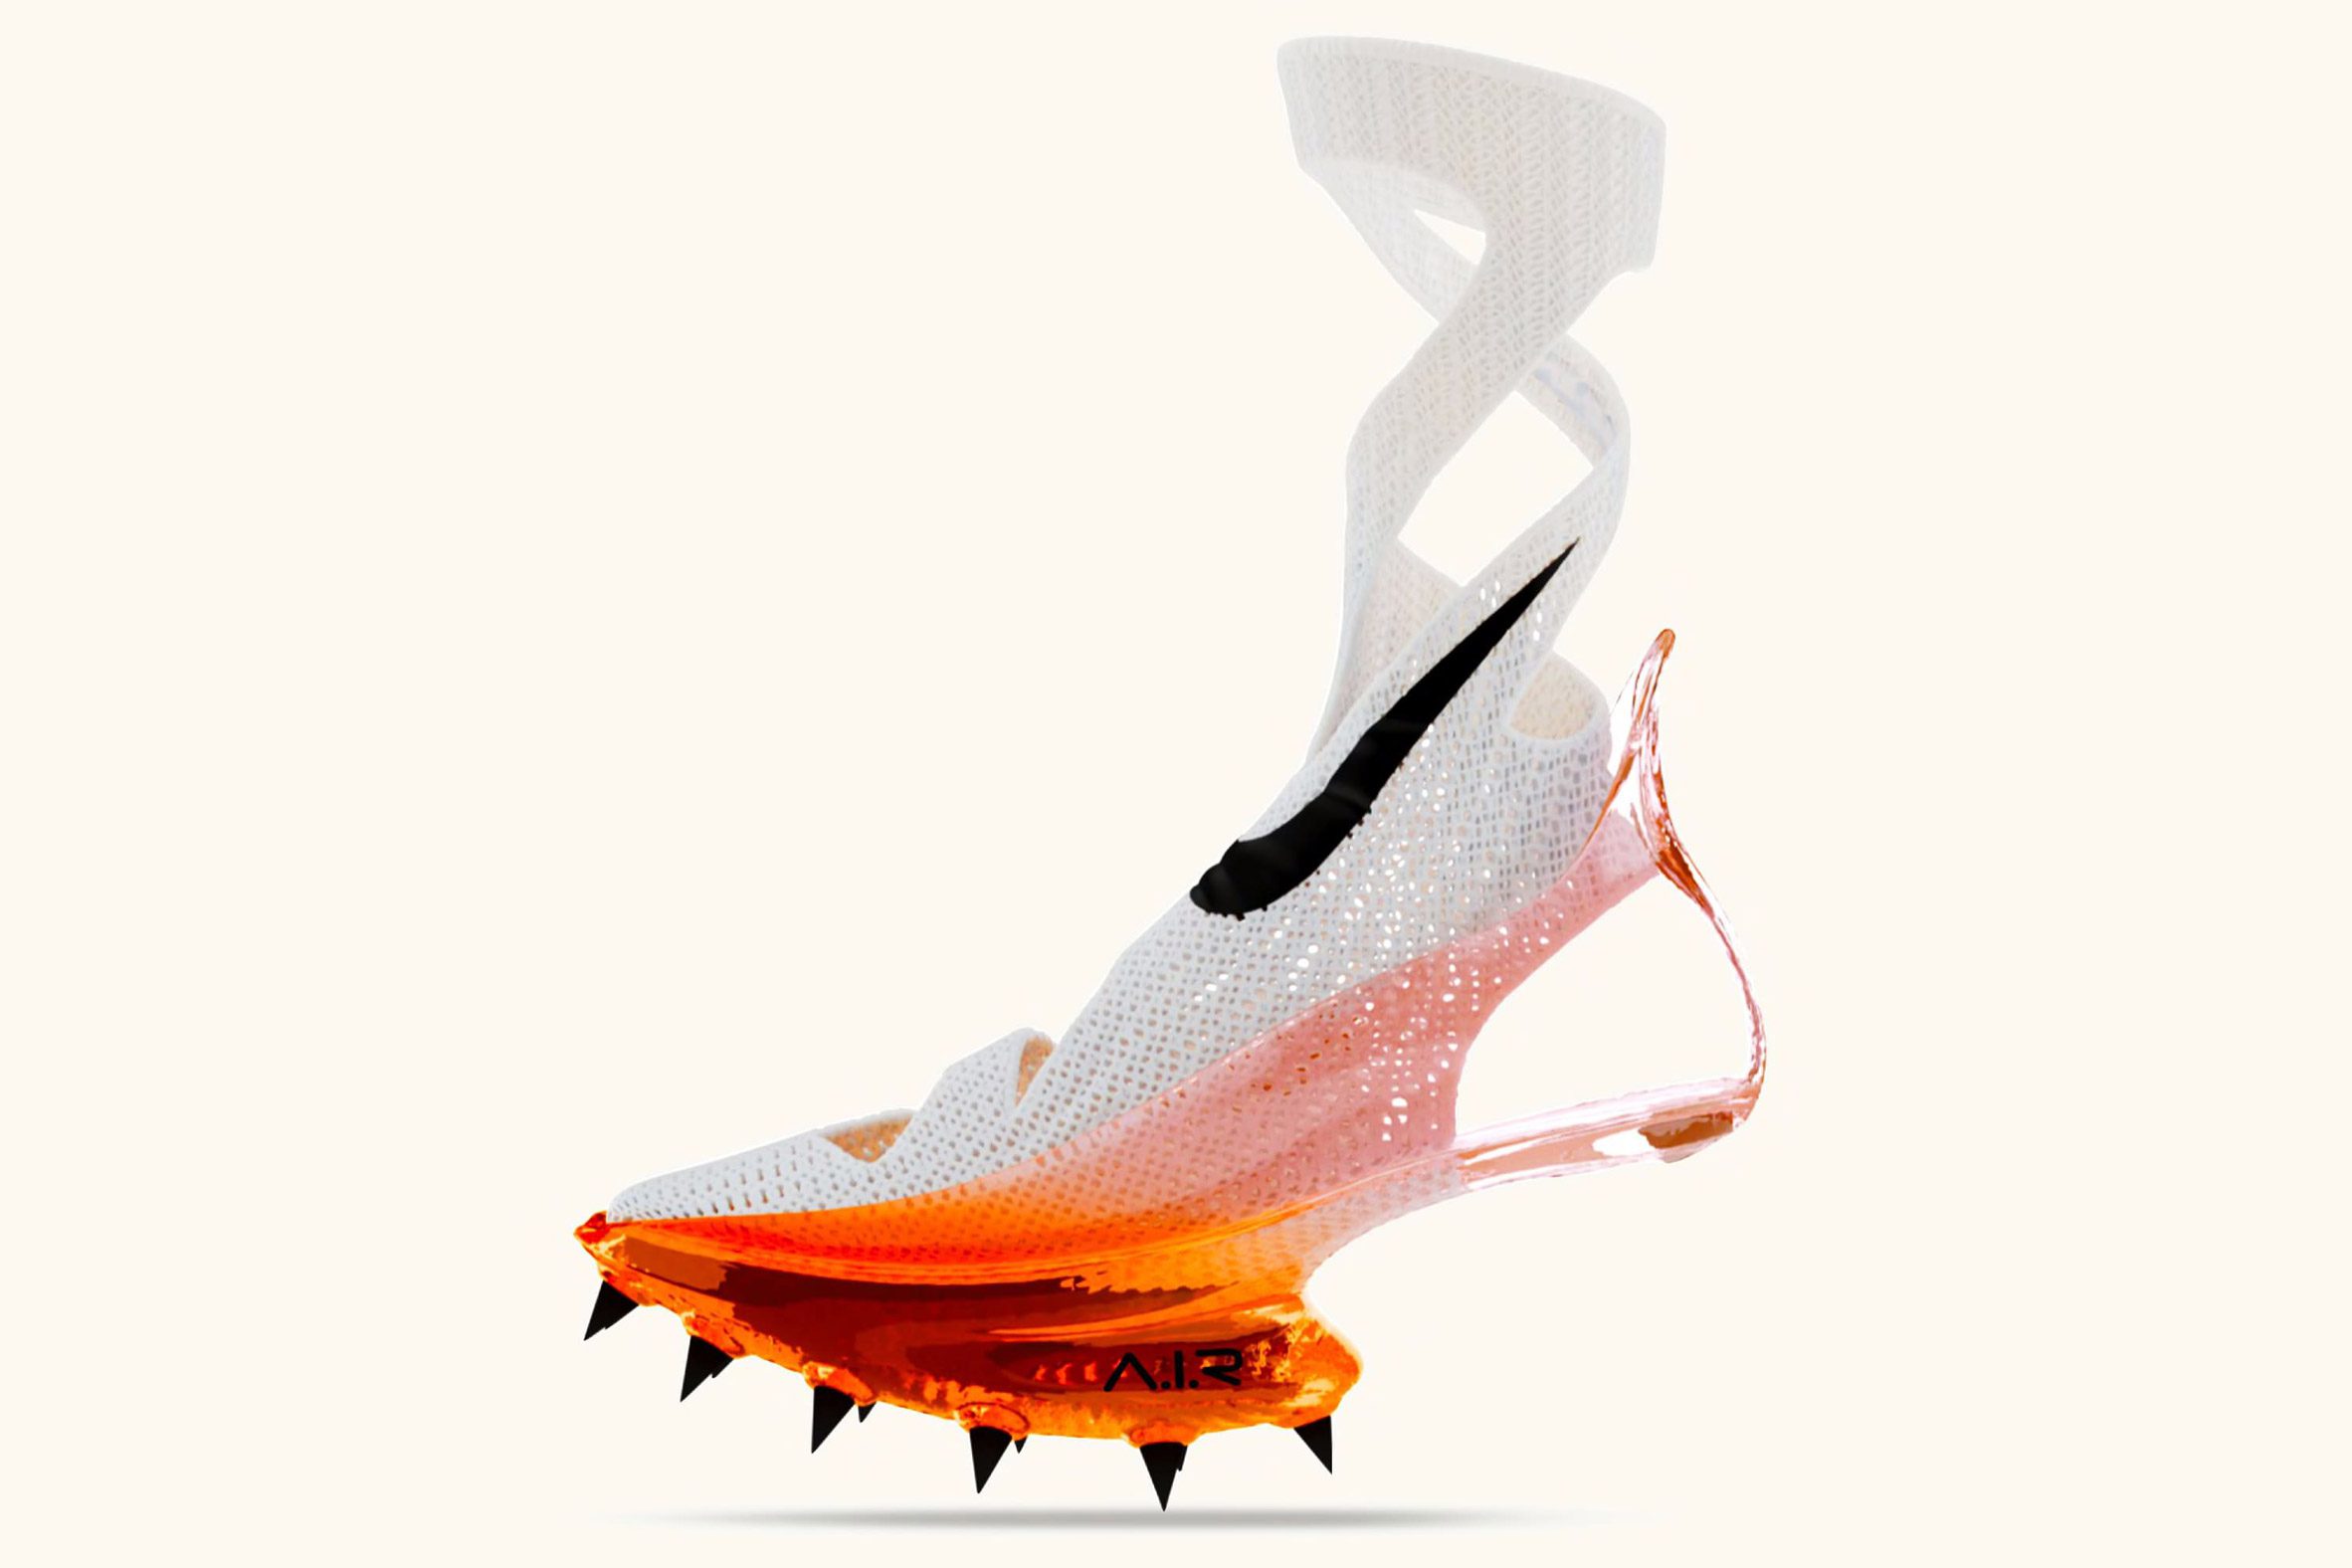 Nike AIR Sha'Carri Richardson concept shoe